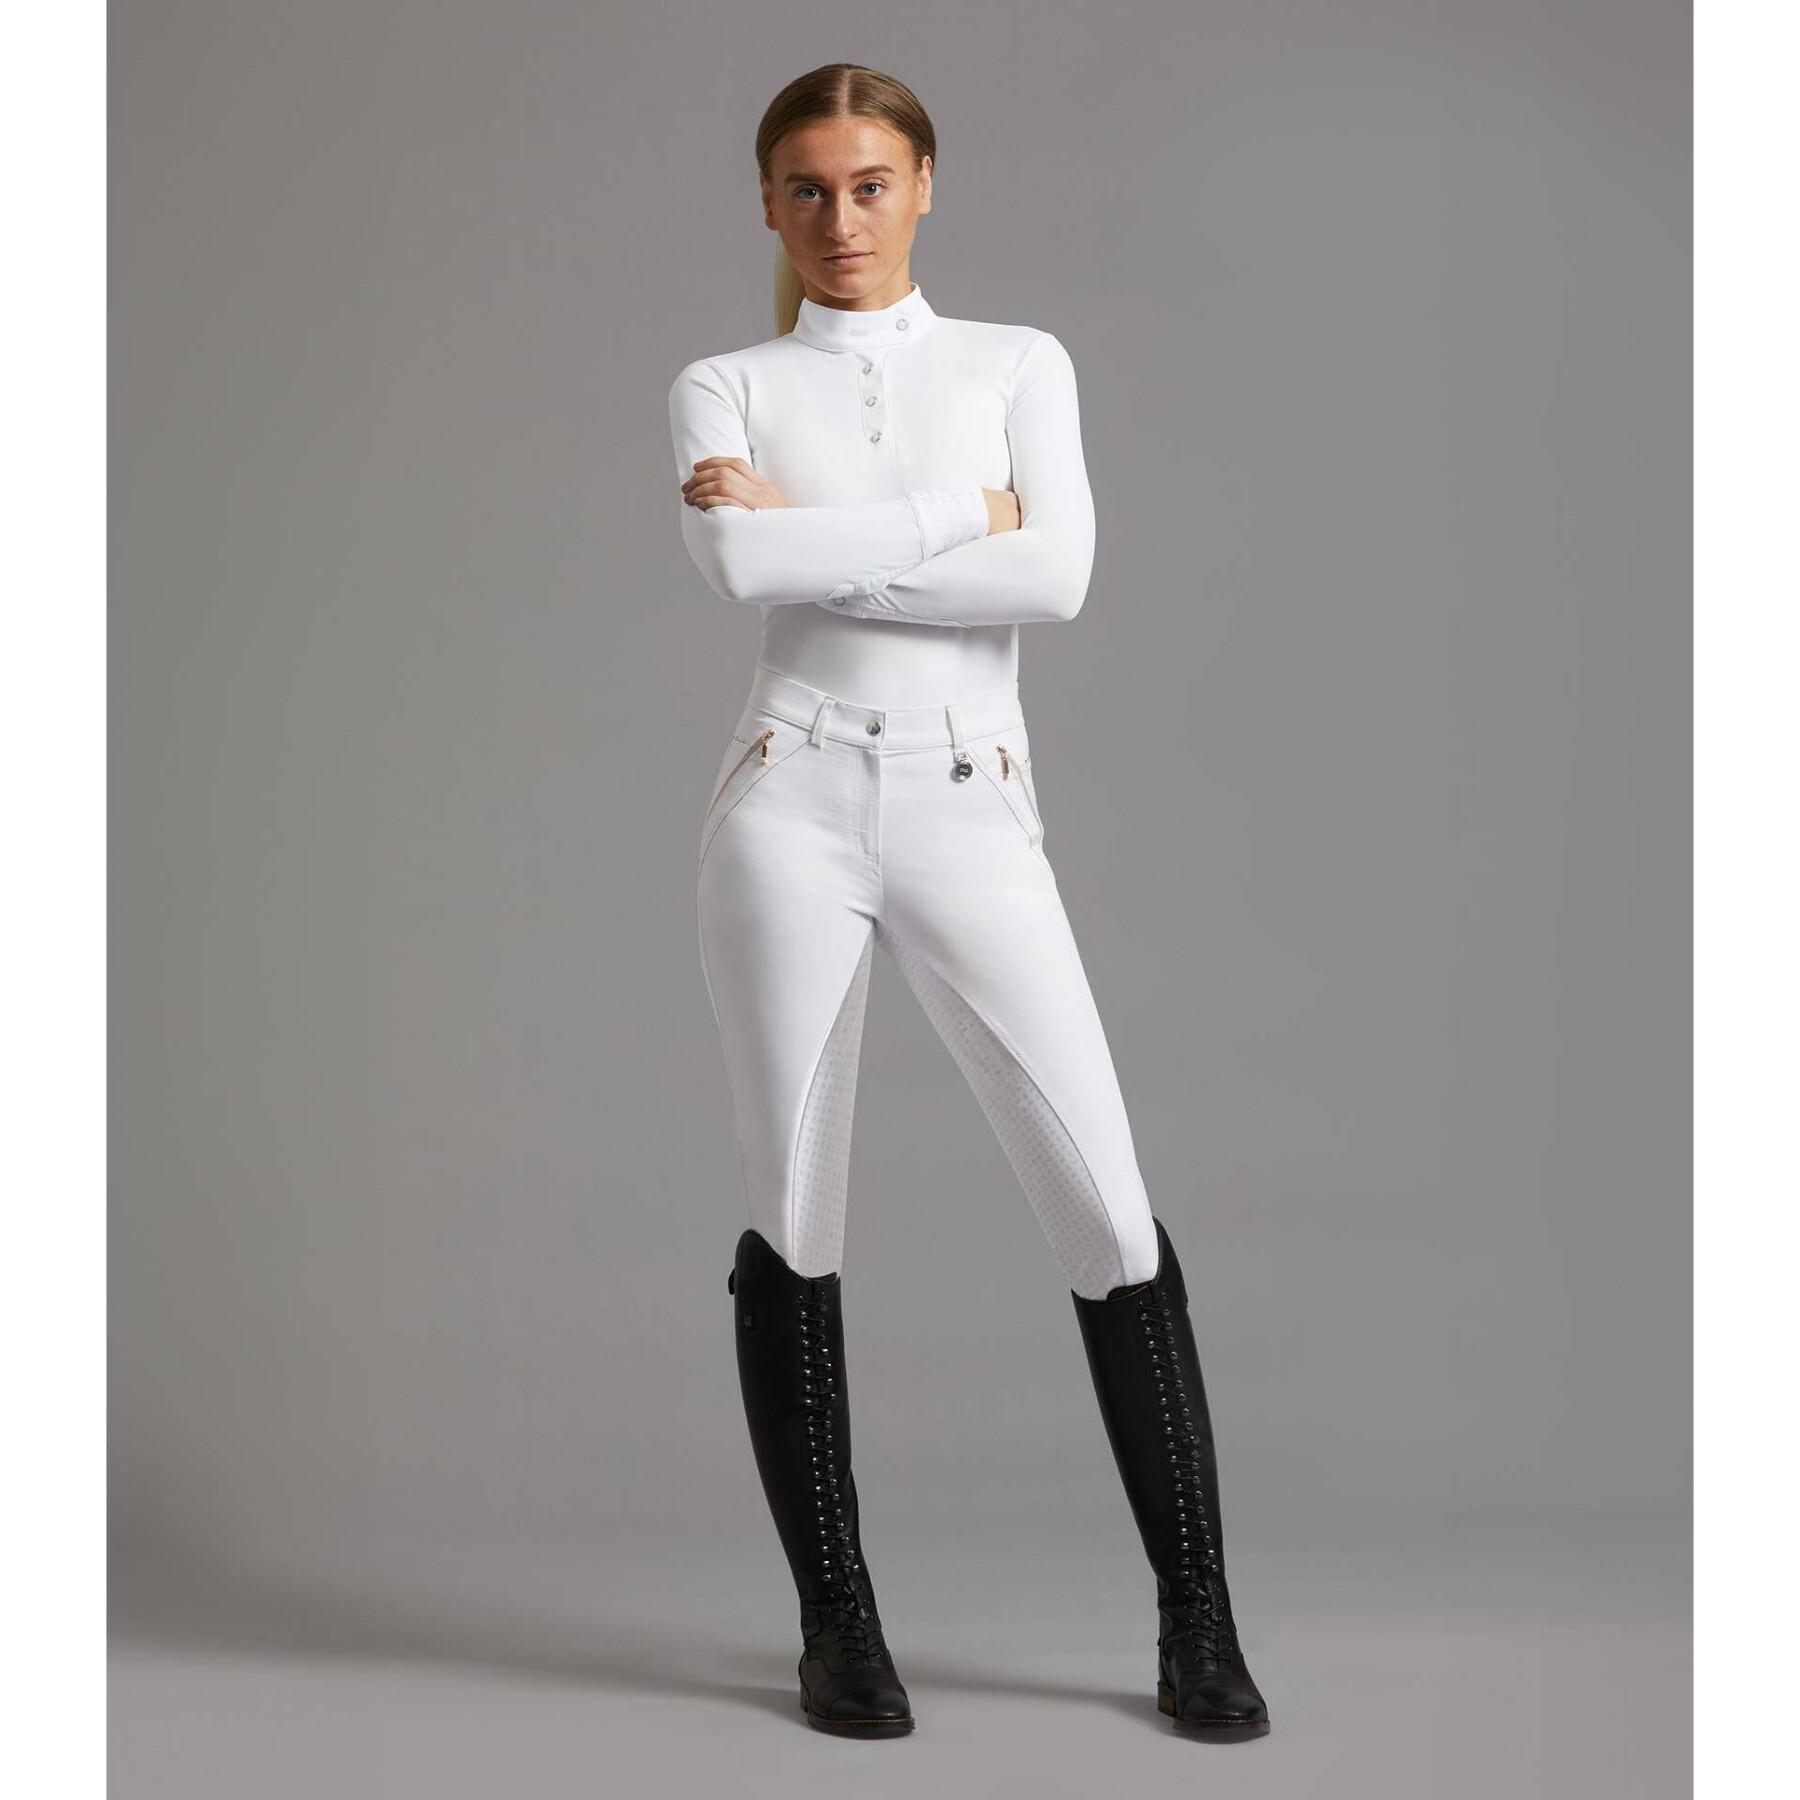 Pantalon d'équitation femme - bleu marine/blanc - Greenfield Selection